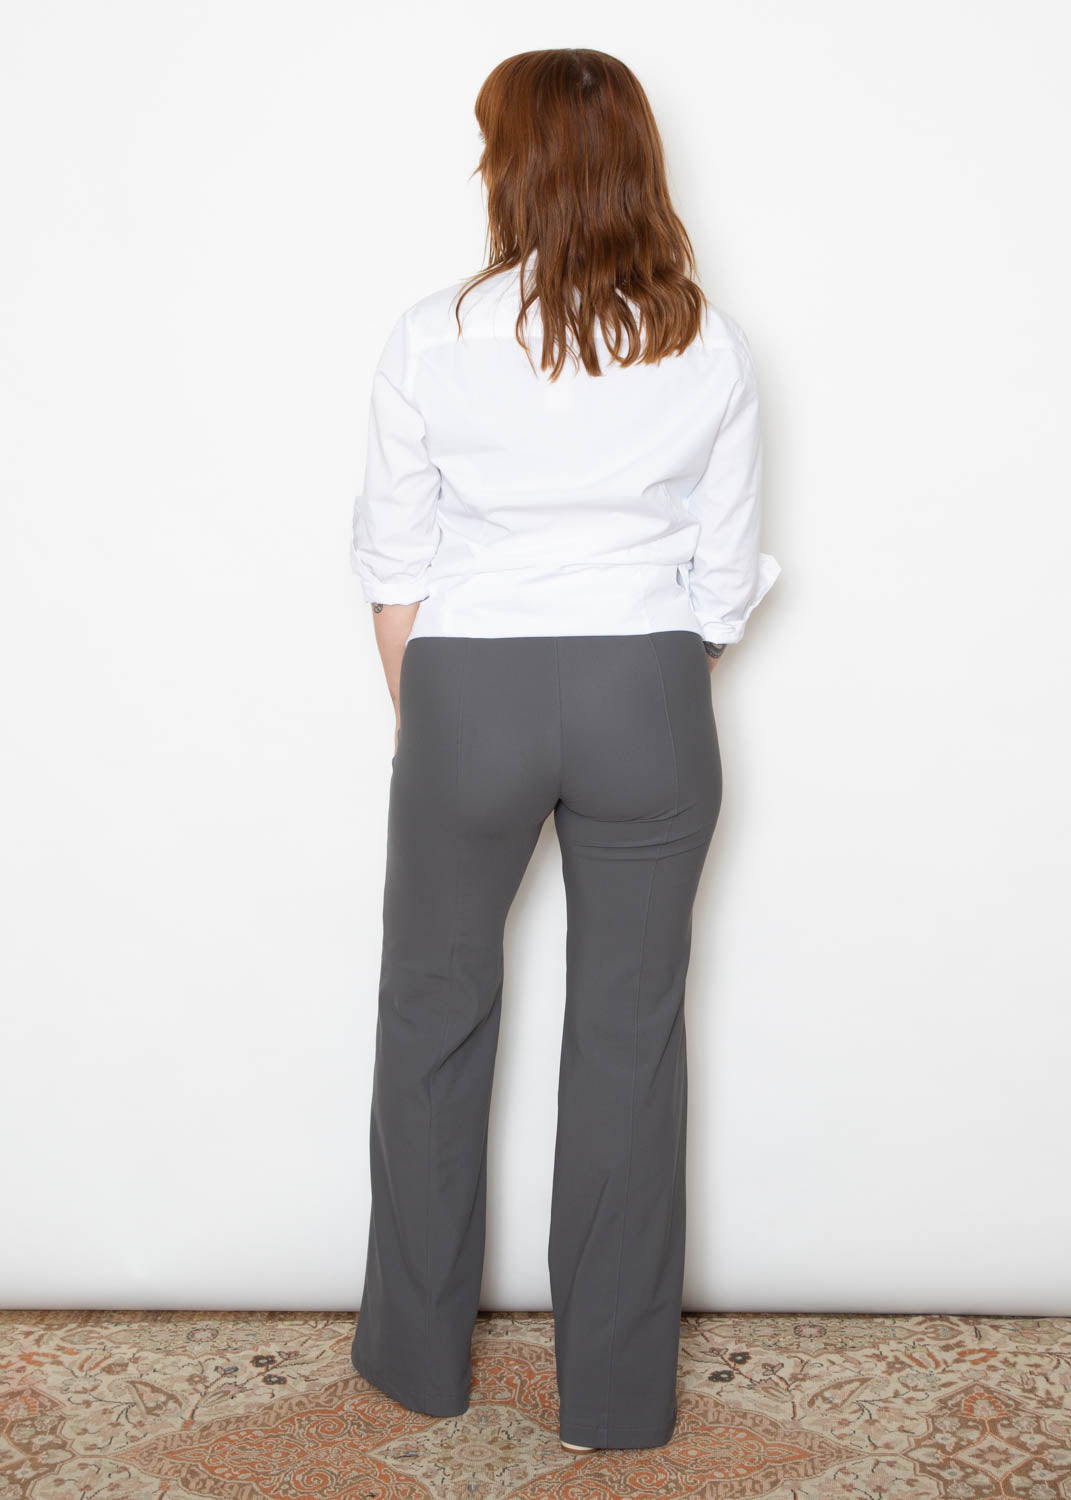 Elaine Kim Tech Stretch Wide Pants